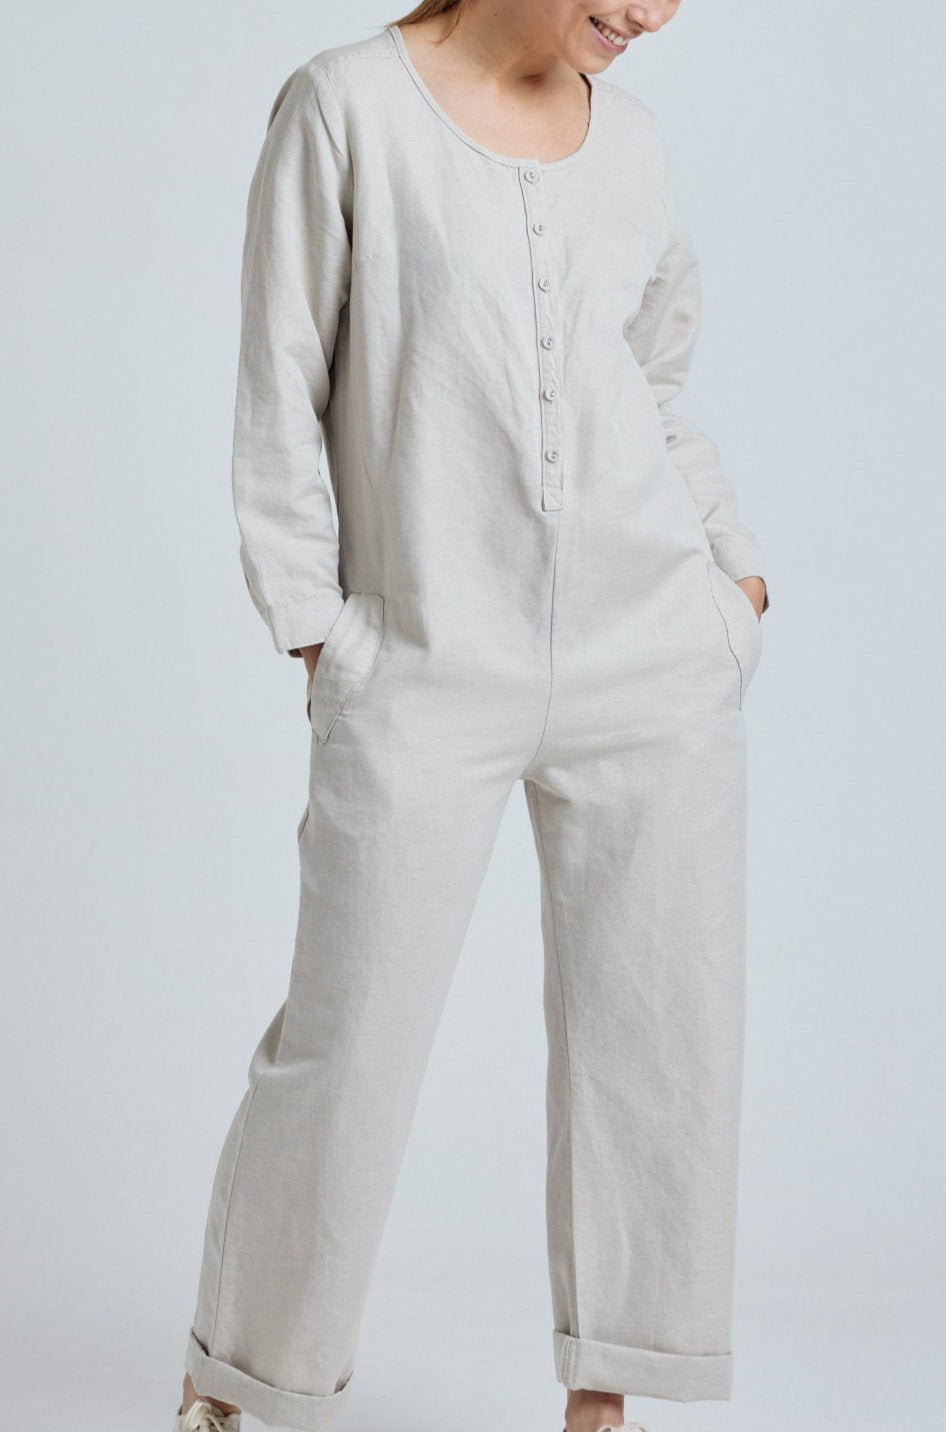 Natural Clara Jumpsuit - GOTS Certified Organic Cotton and Linen